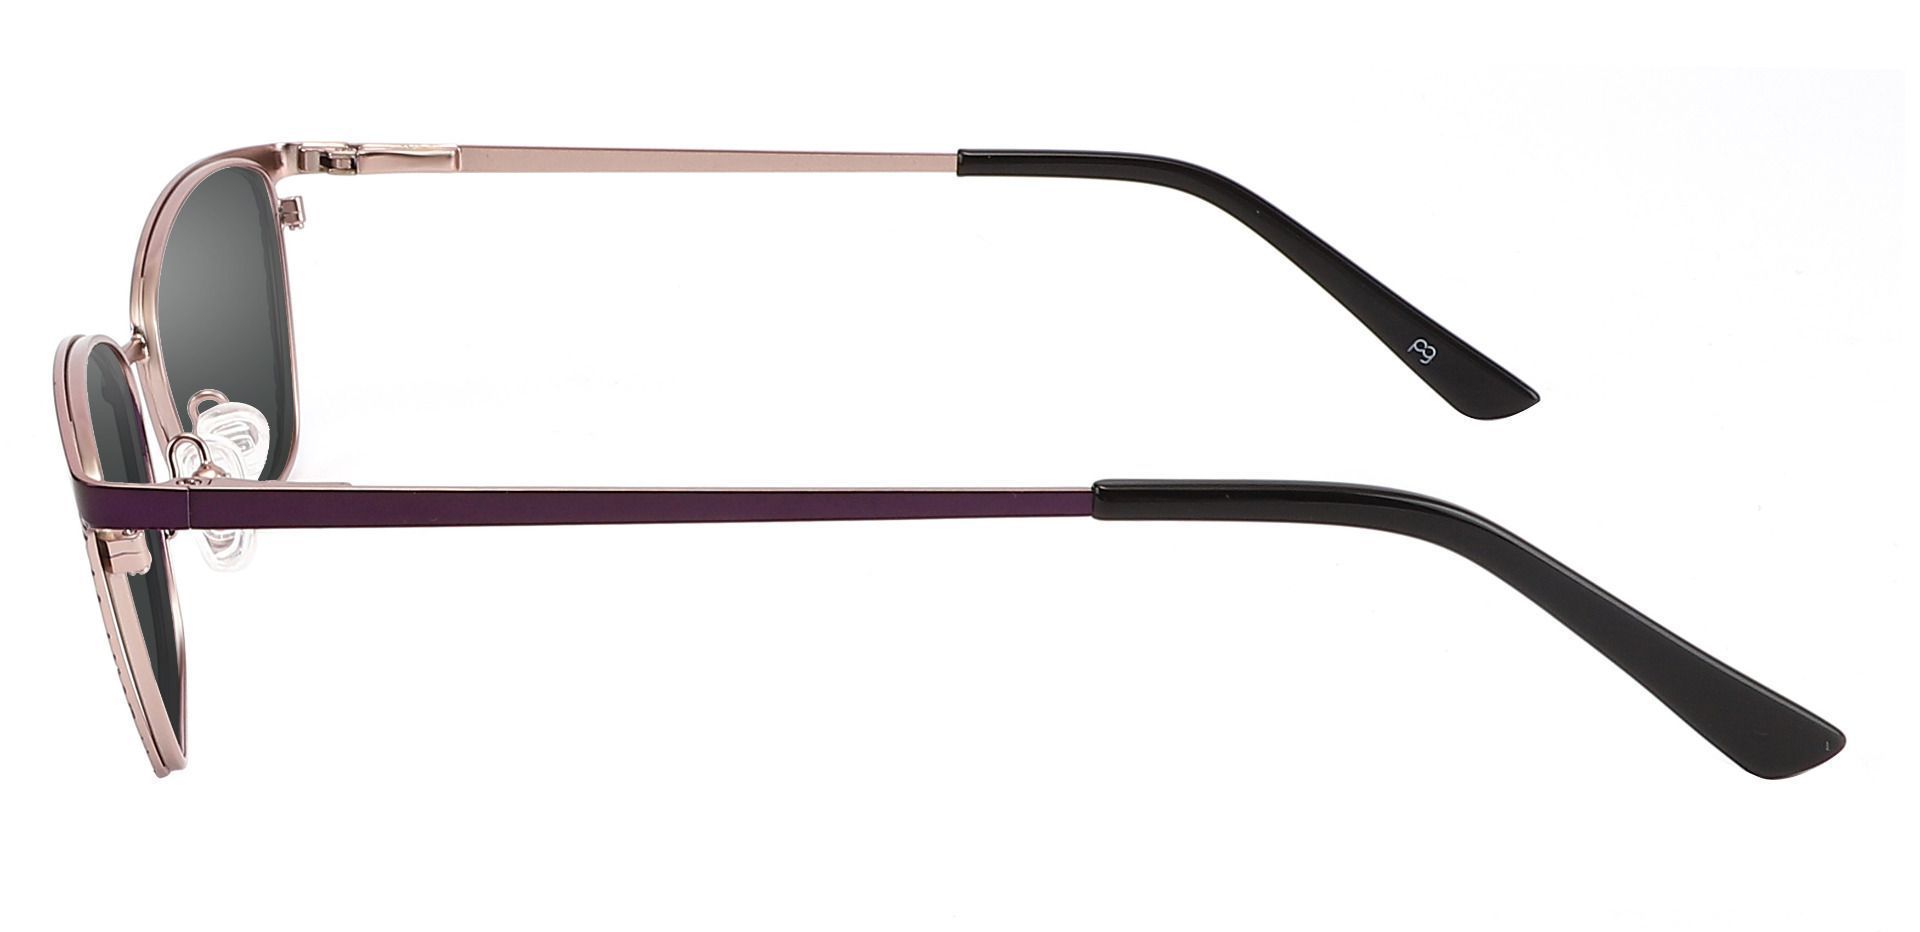 Solange Cat Eye Non-Rx Sunglasses - Purple Frame With Gray Lenses